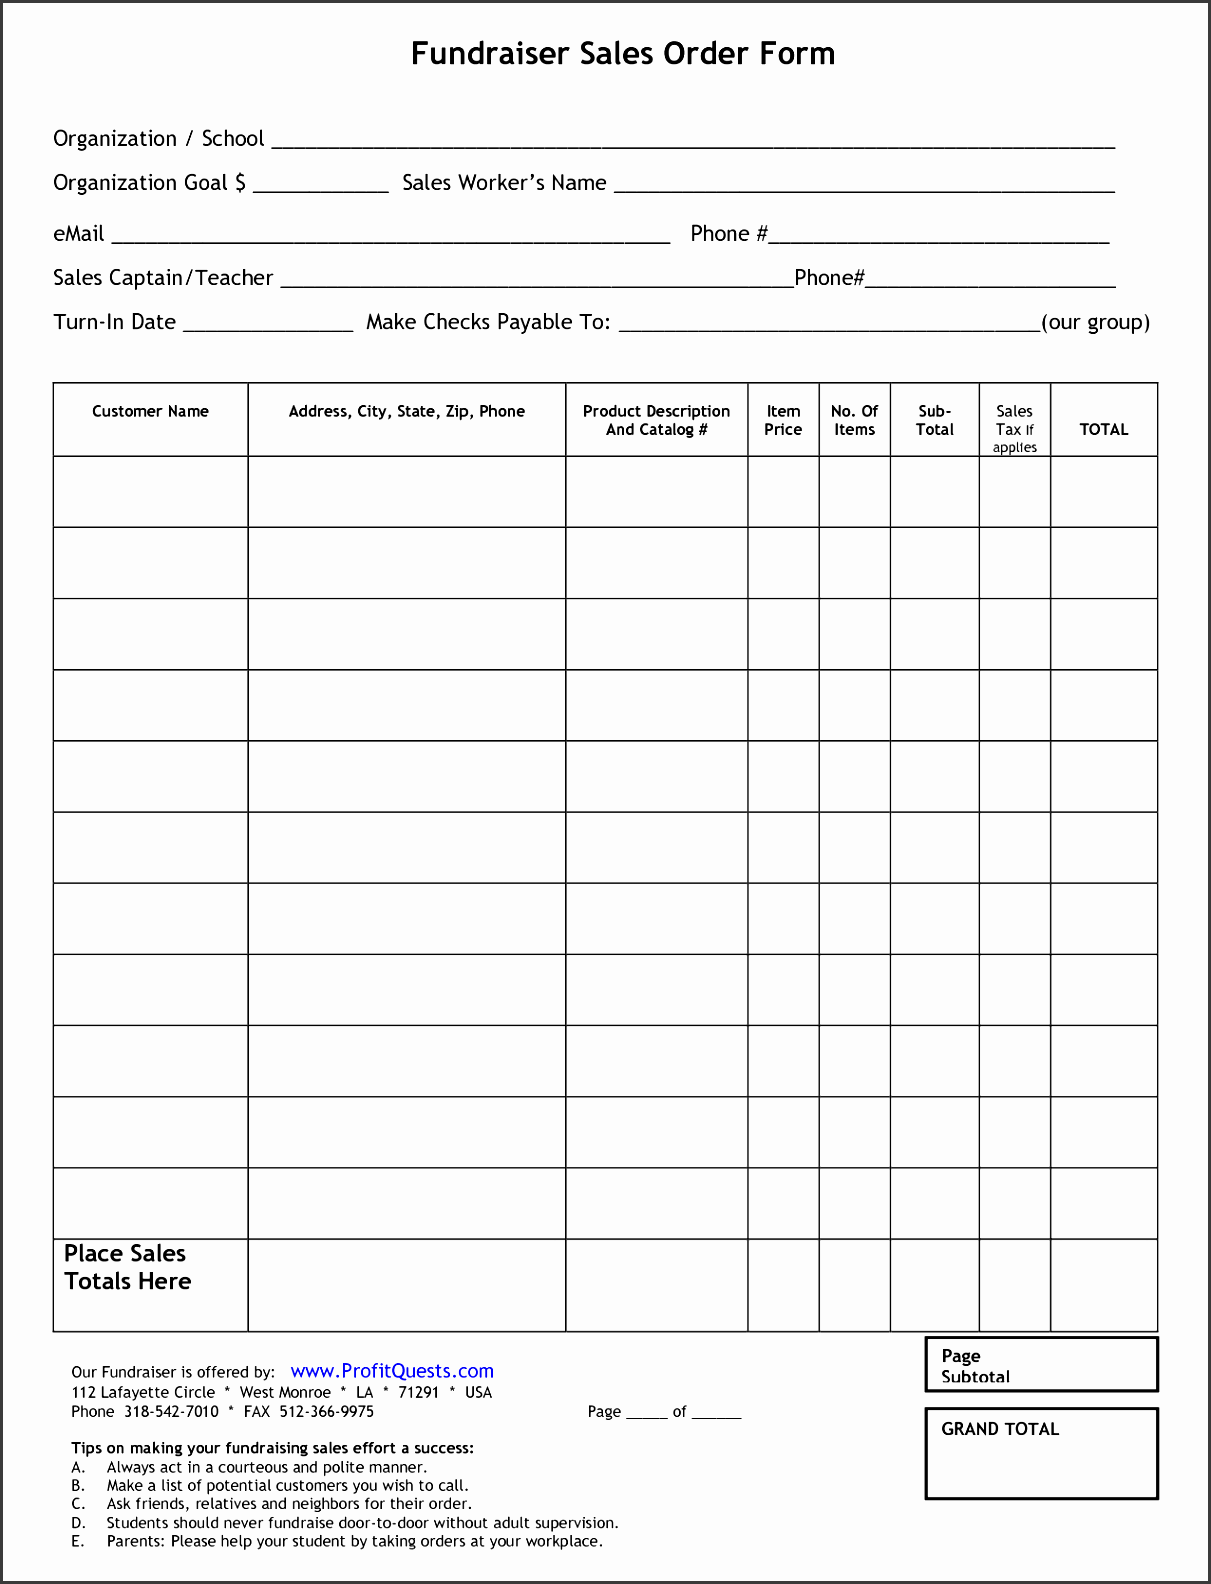 fundraiser order form fundraiser order form template